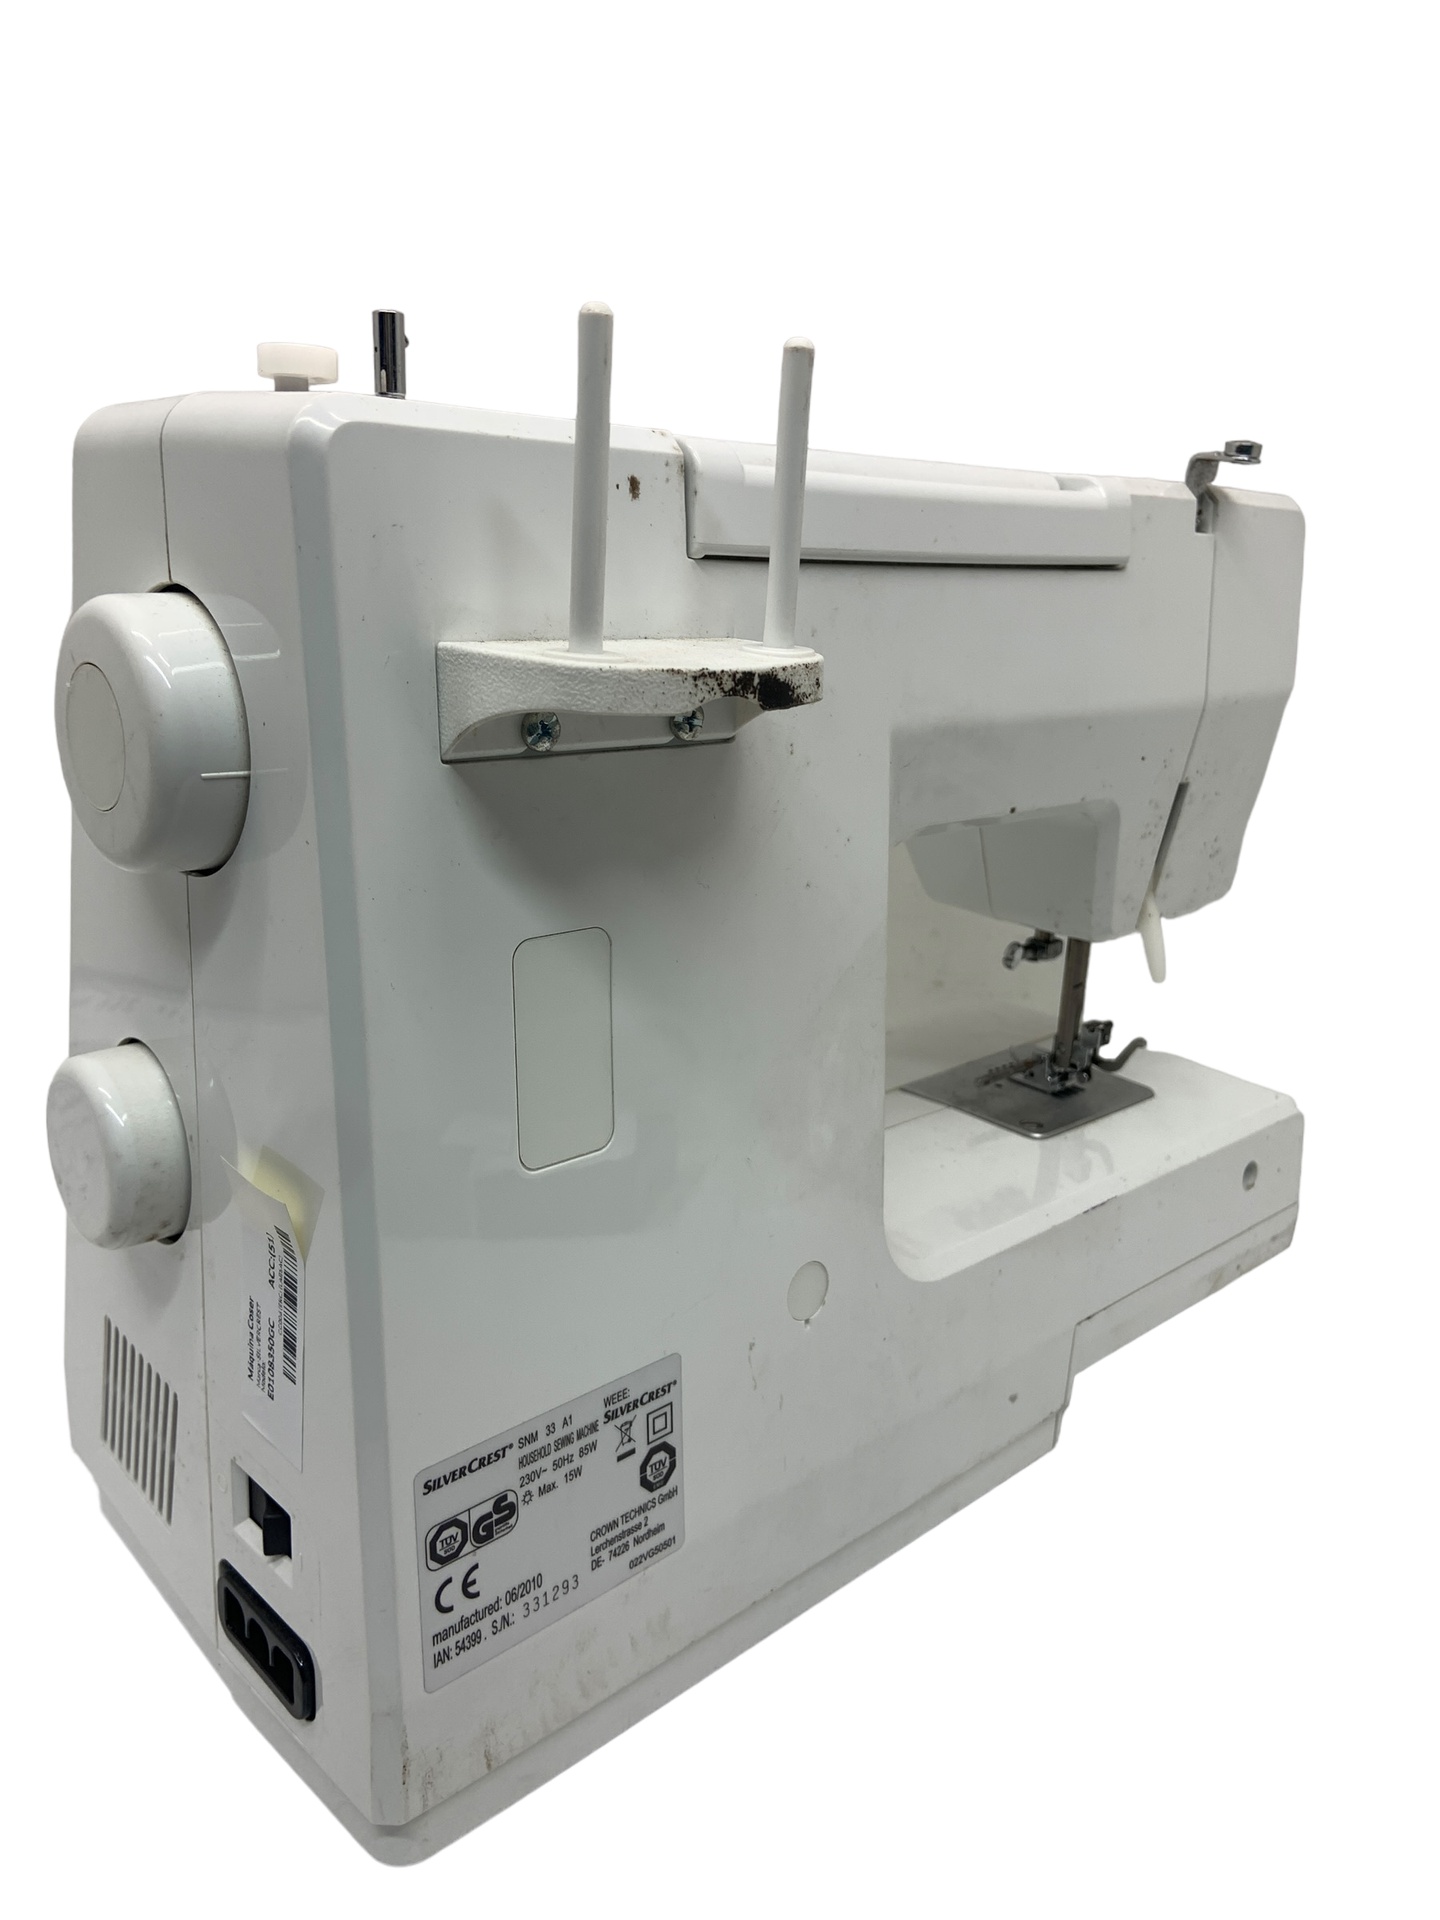 Pack Basic de accesorios maquinas de coser Silvercrest SNM31 Lidl.